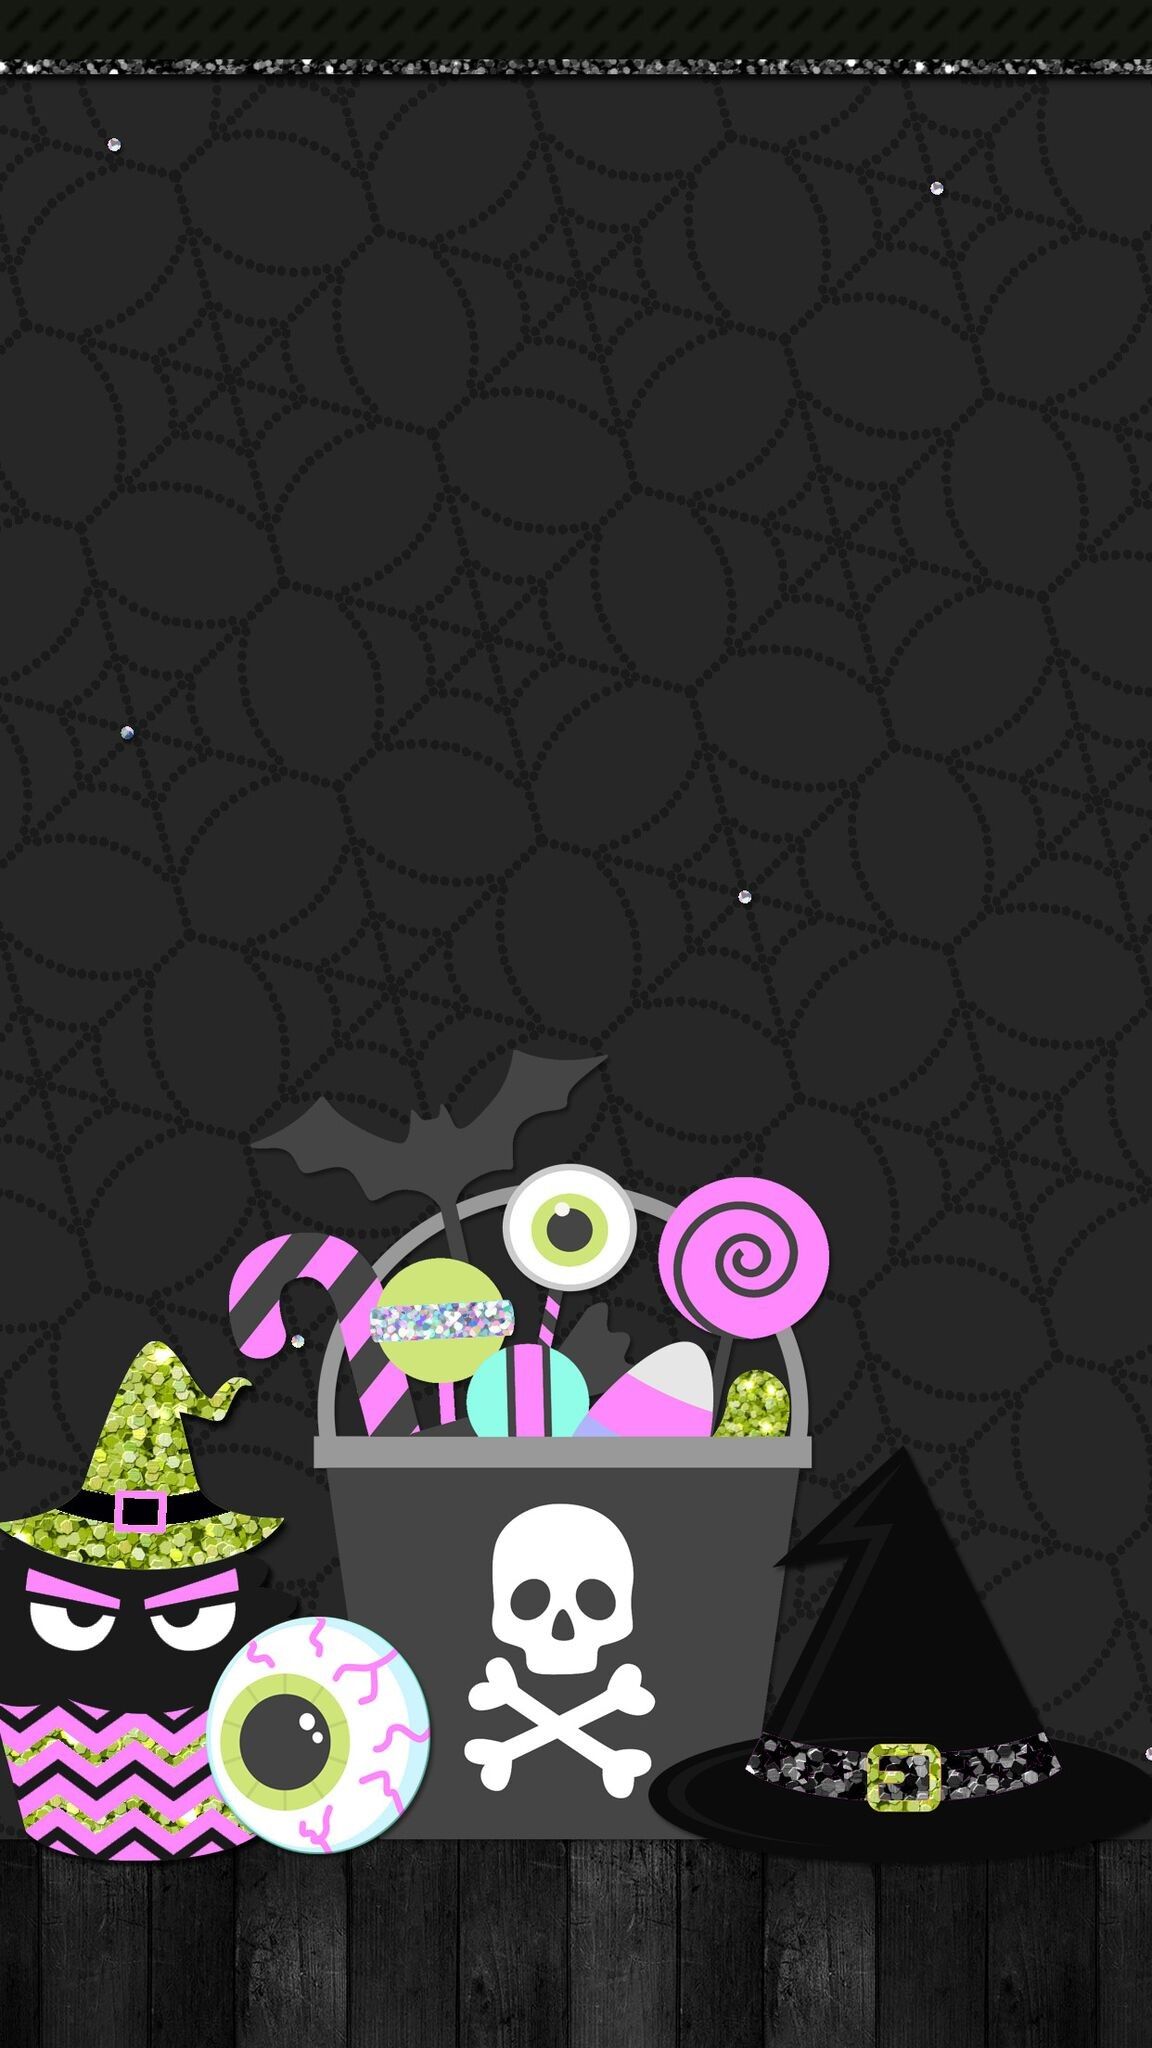 Creepy Cute Wallpaper. Halloween wallpaper, Halloween wallpaper iphone, Creepy cute